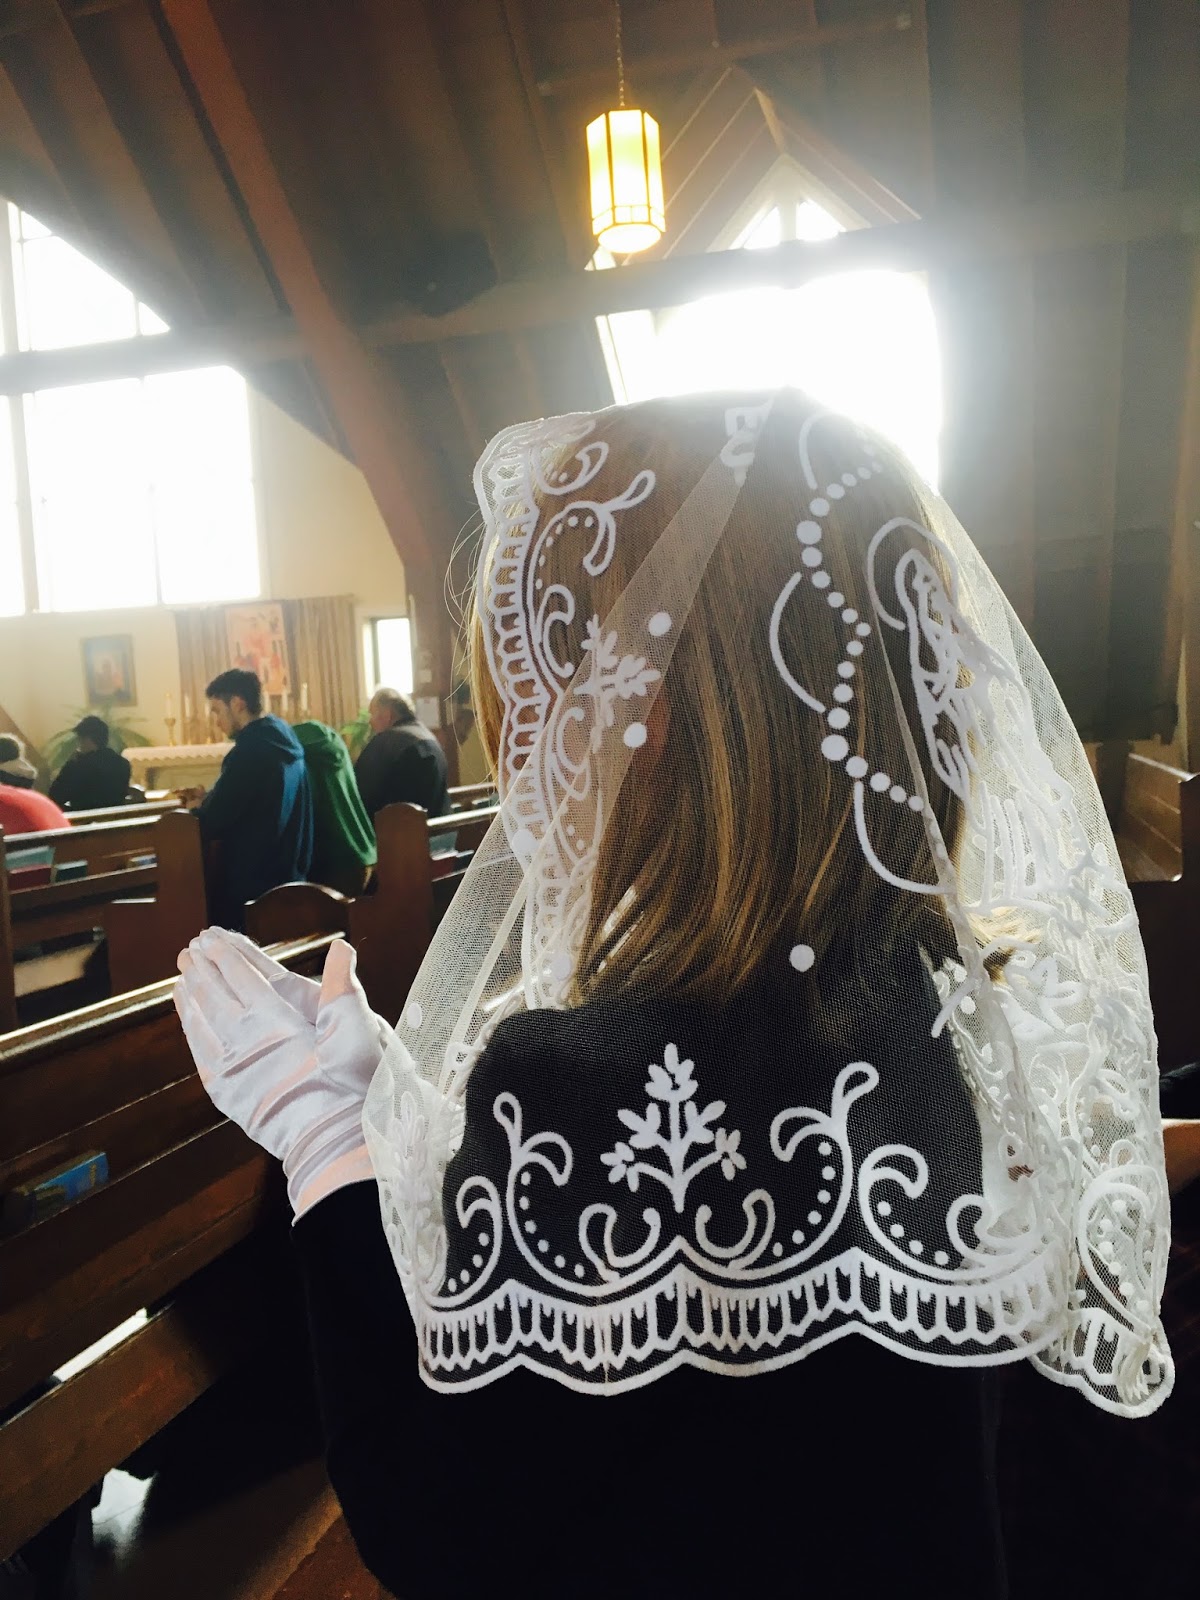 Christian Women Veil Tradition behind Mantilla Ladies Catholic